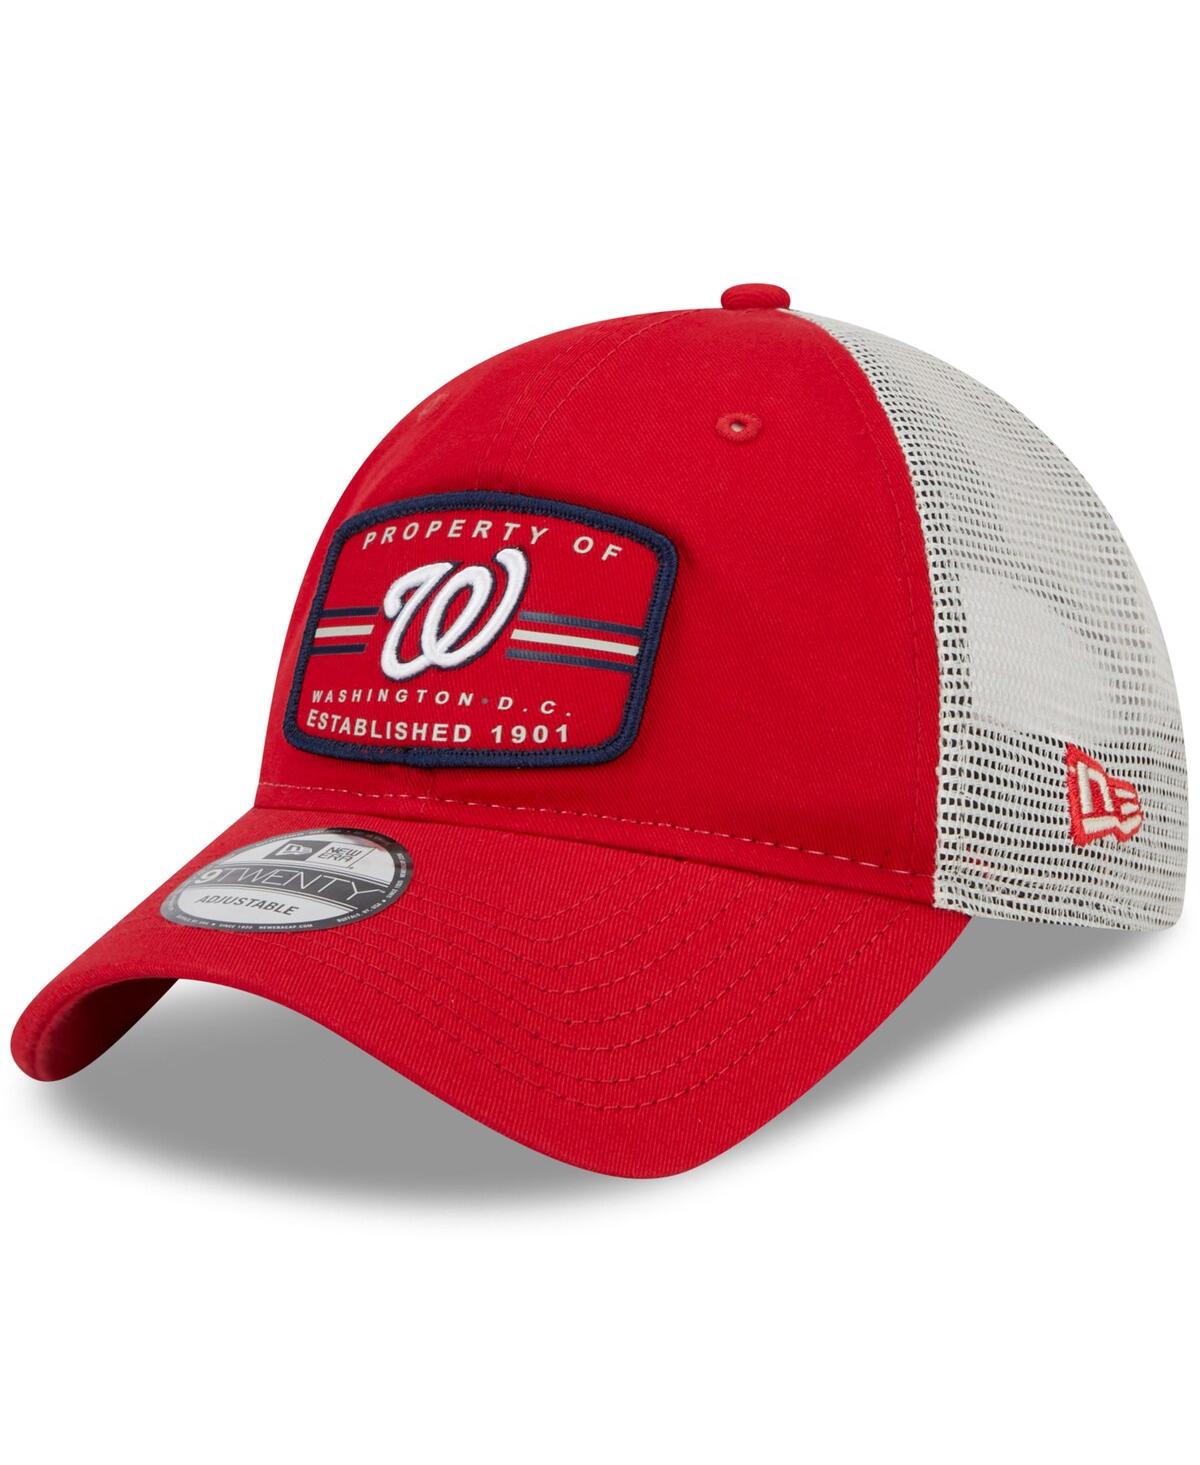 Shop New Era Men's  Red Washington Nationals Property Trucker 9twenty Snapback Hat